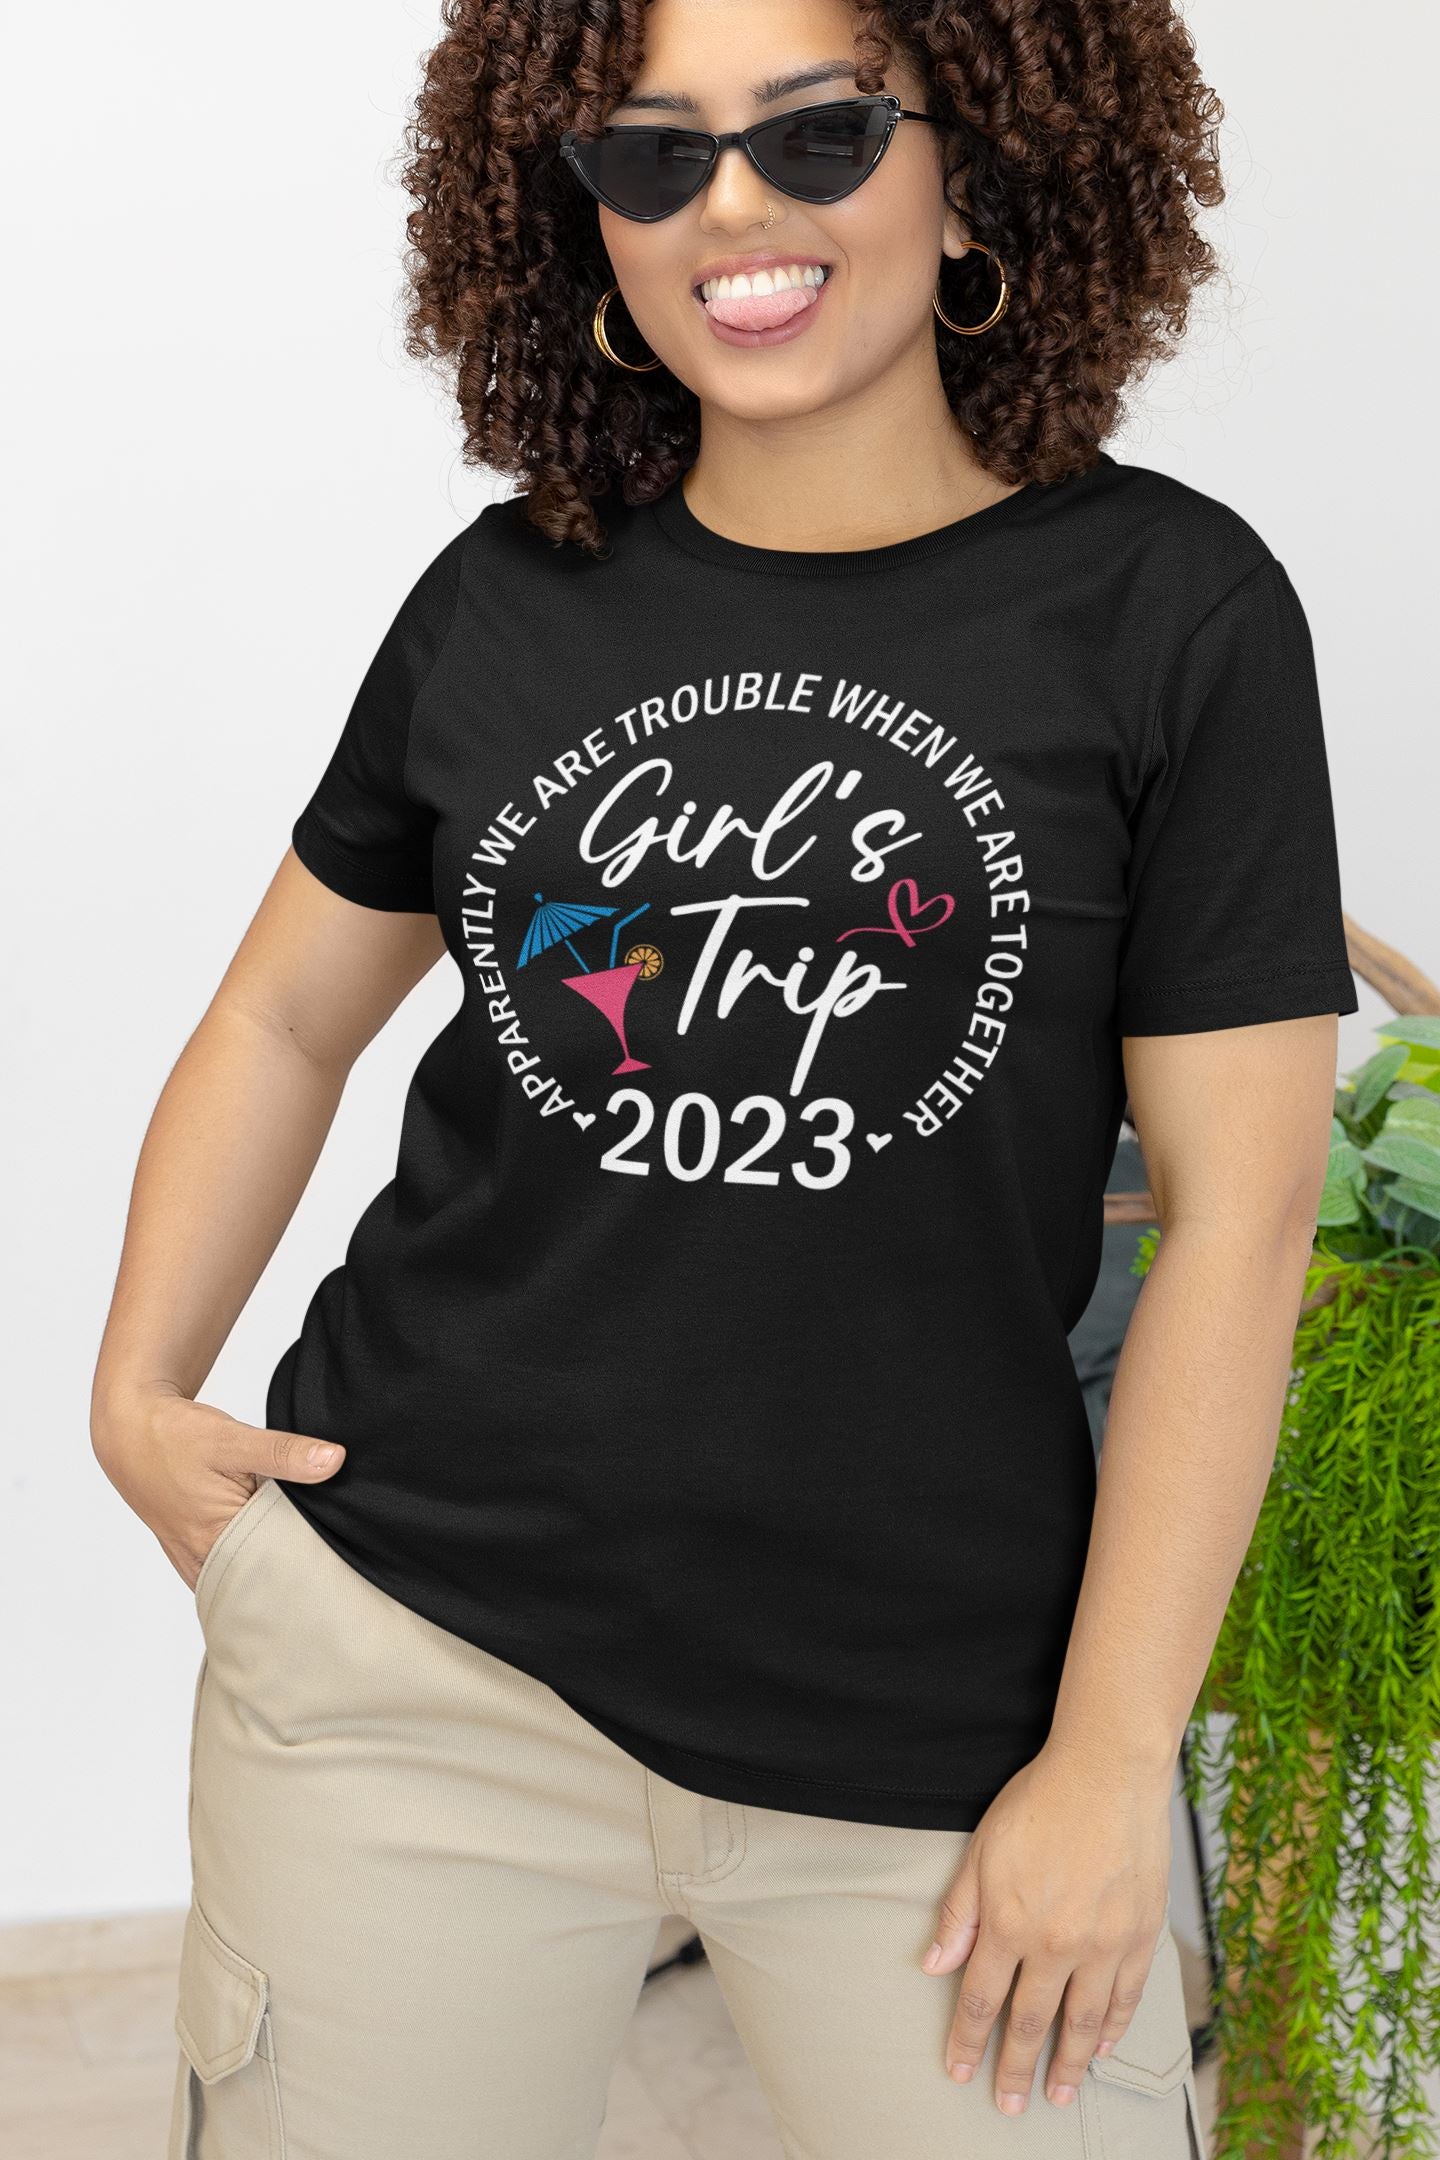 Girls Trip 2023 T-shirts